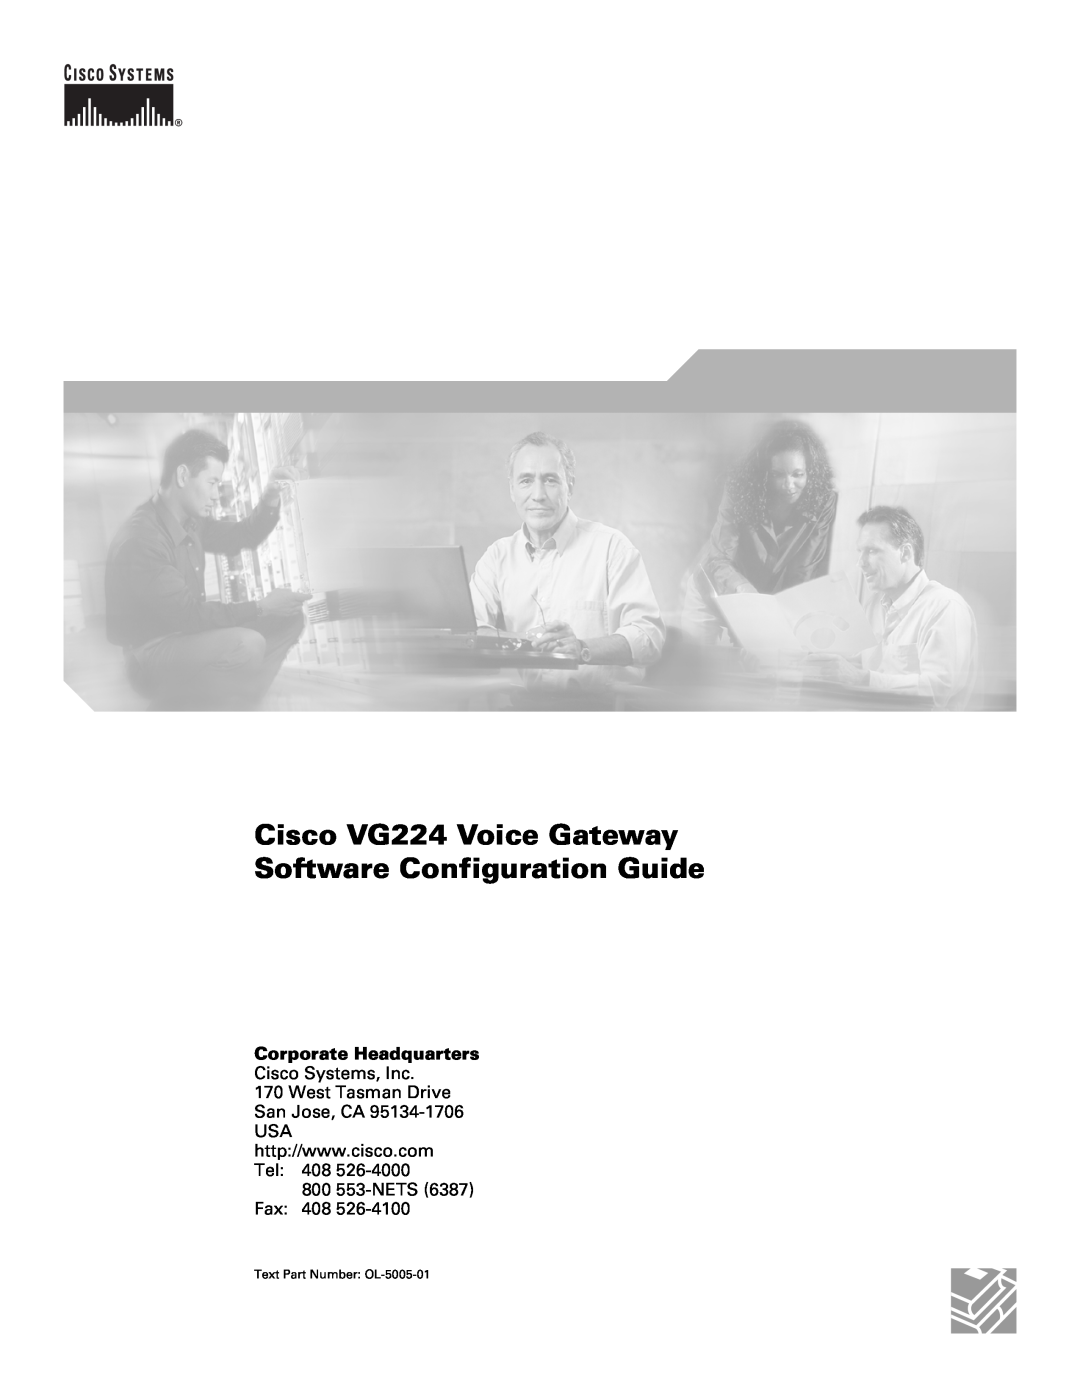 Cisco Systems manual Corporate Headquarters, Cisco VG224 Voice Gateway Software Configuration Guide 